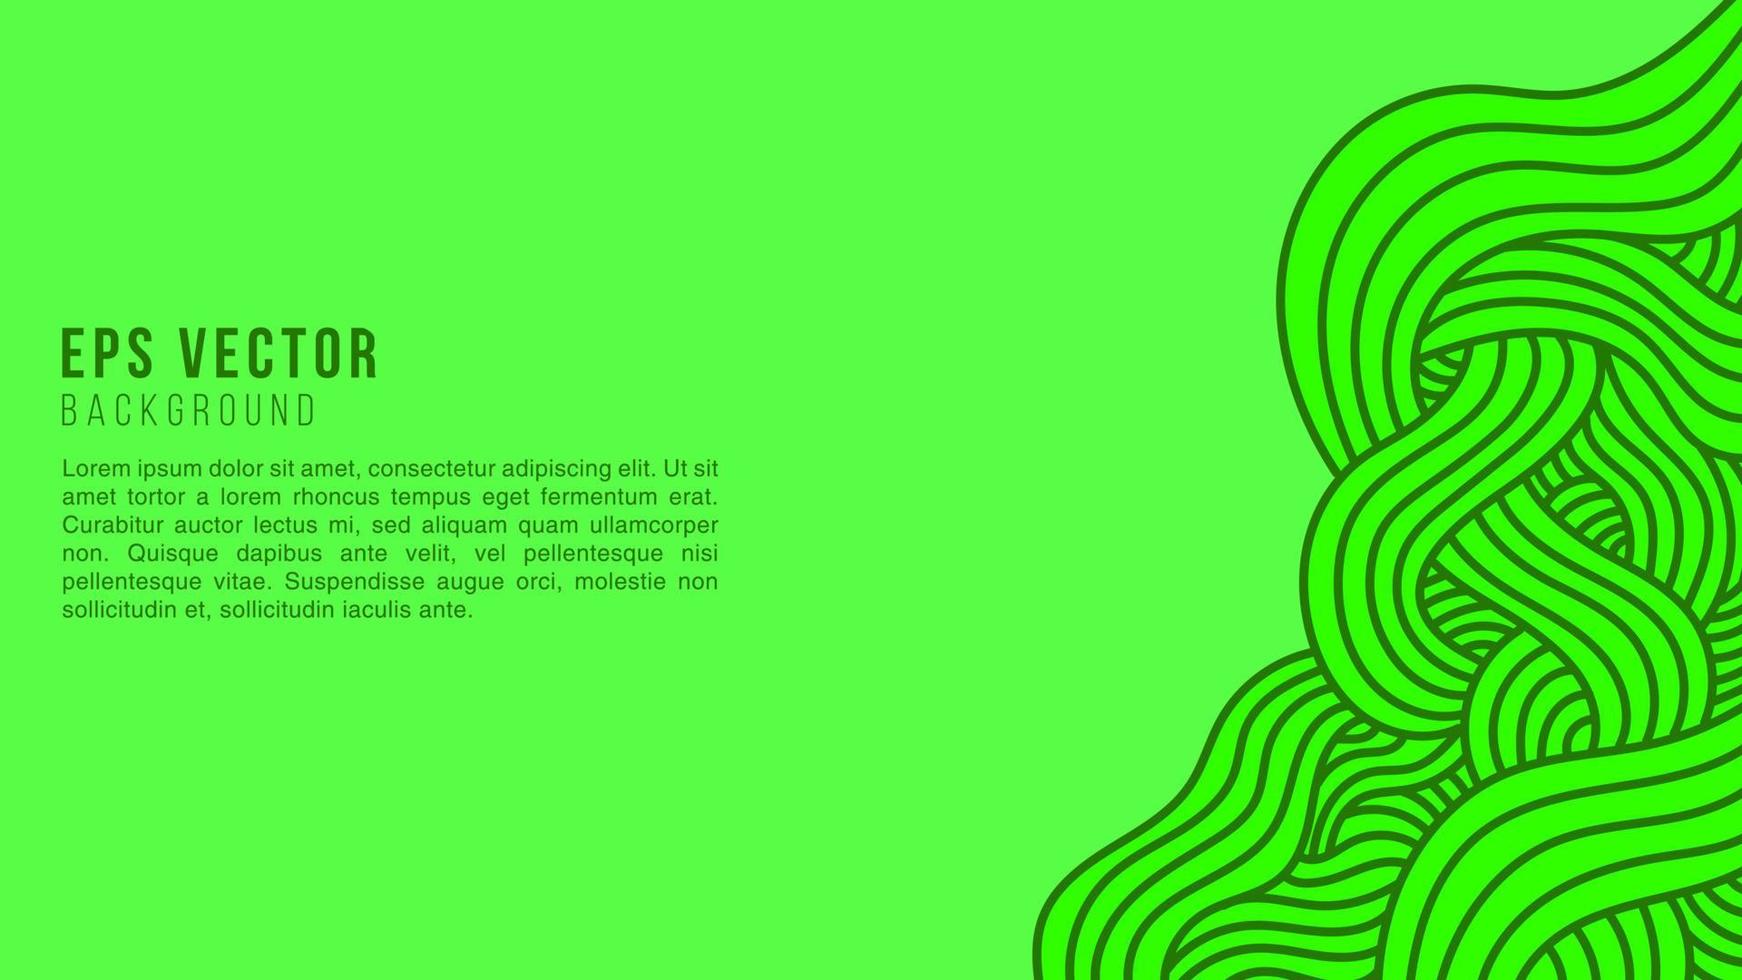 Fondo abstracto de líneas onduladas verdes con estilo de contorno dibujado a mano. Se puede utilizar para carteles, pancartas comerciales, volantes, anuncios, folletos, catálogos, sitios web, sitios web, presentaciones, portadas de libros, folletos. vector